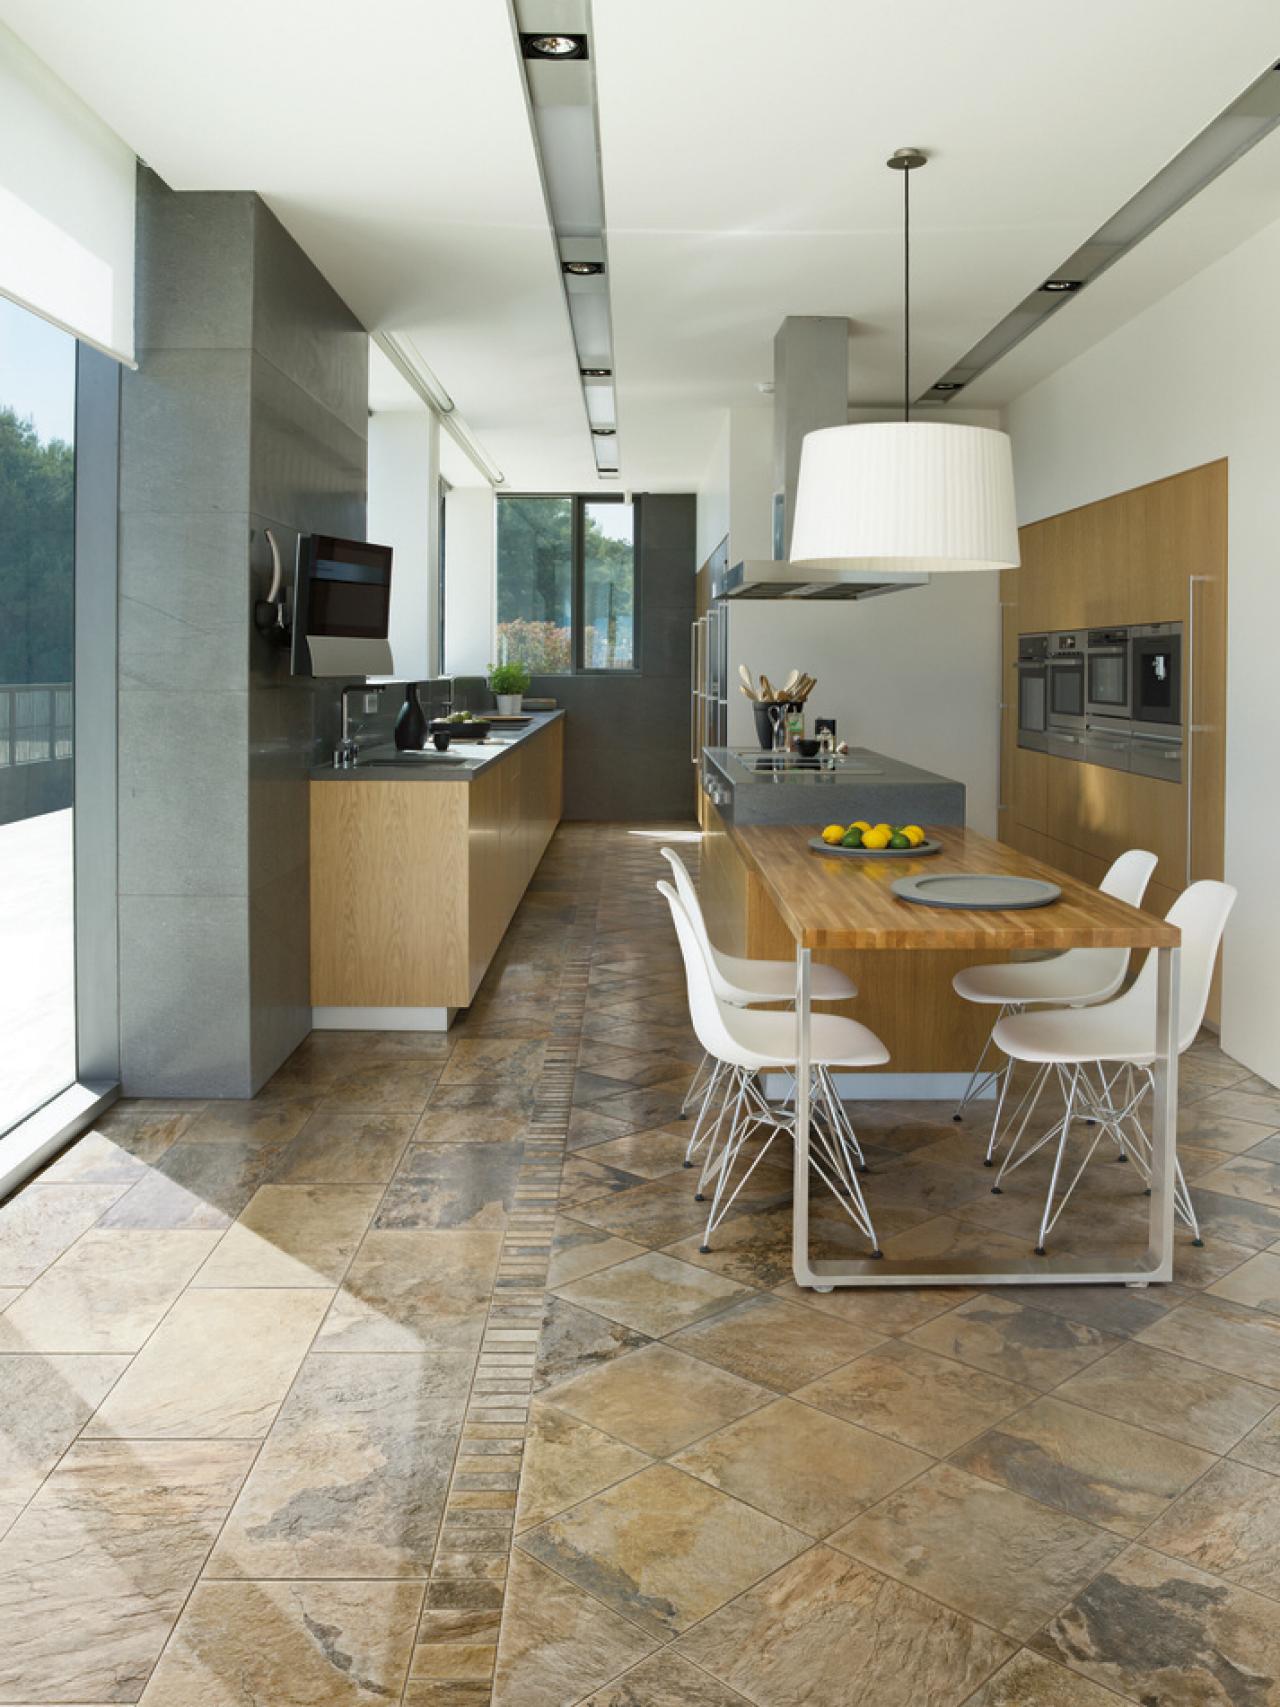 Tile Flooring In The Kitchen HGTV